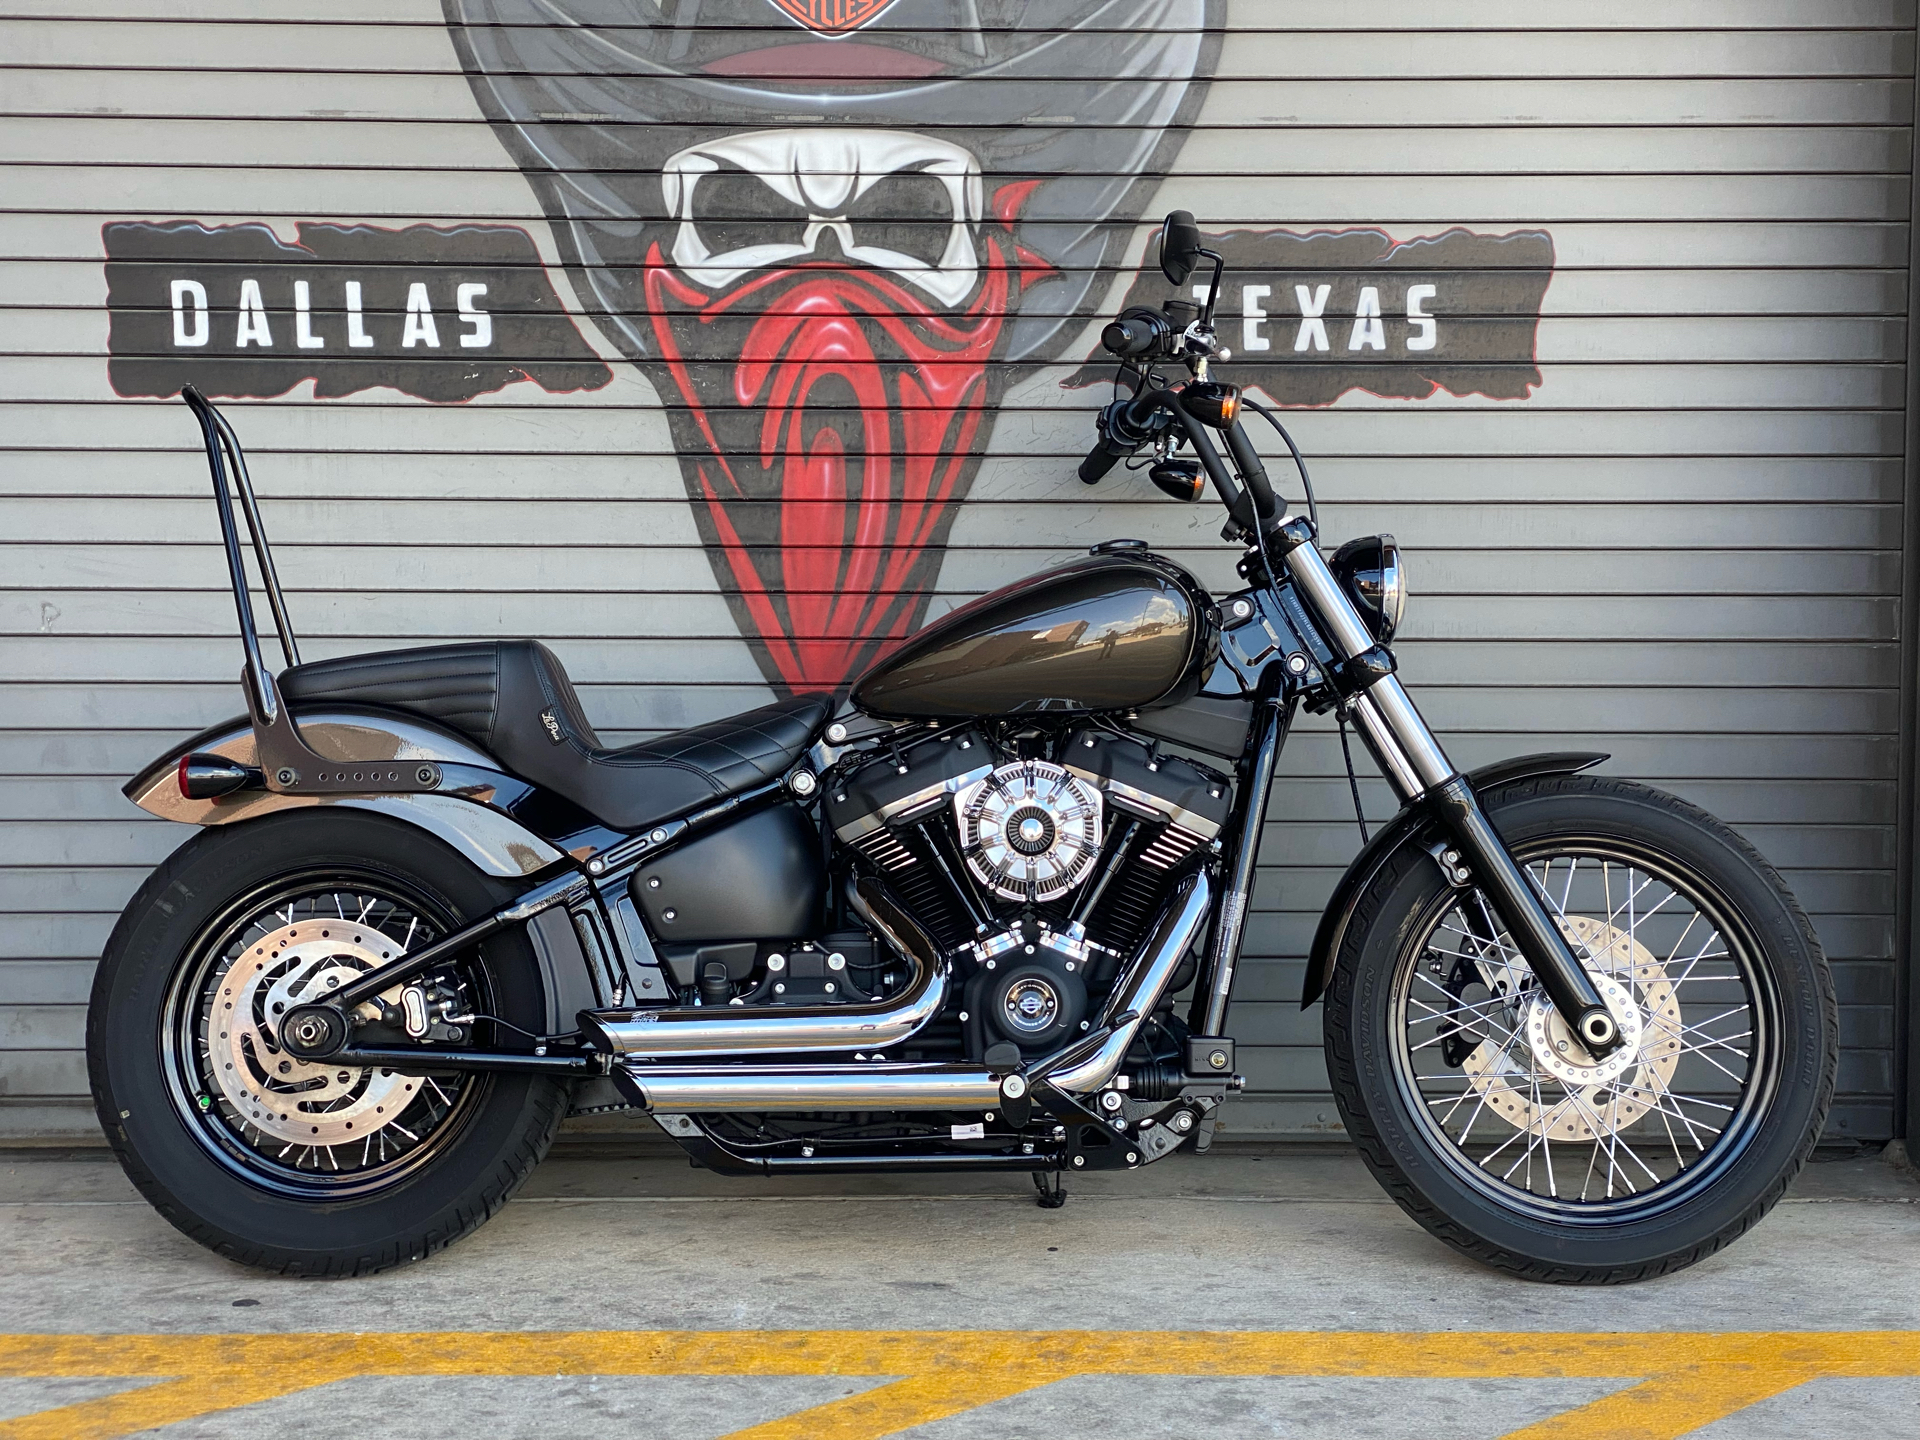 2020 Harley-Davidson Street Bob® in Carrollton, Texas - Photo 3